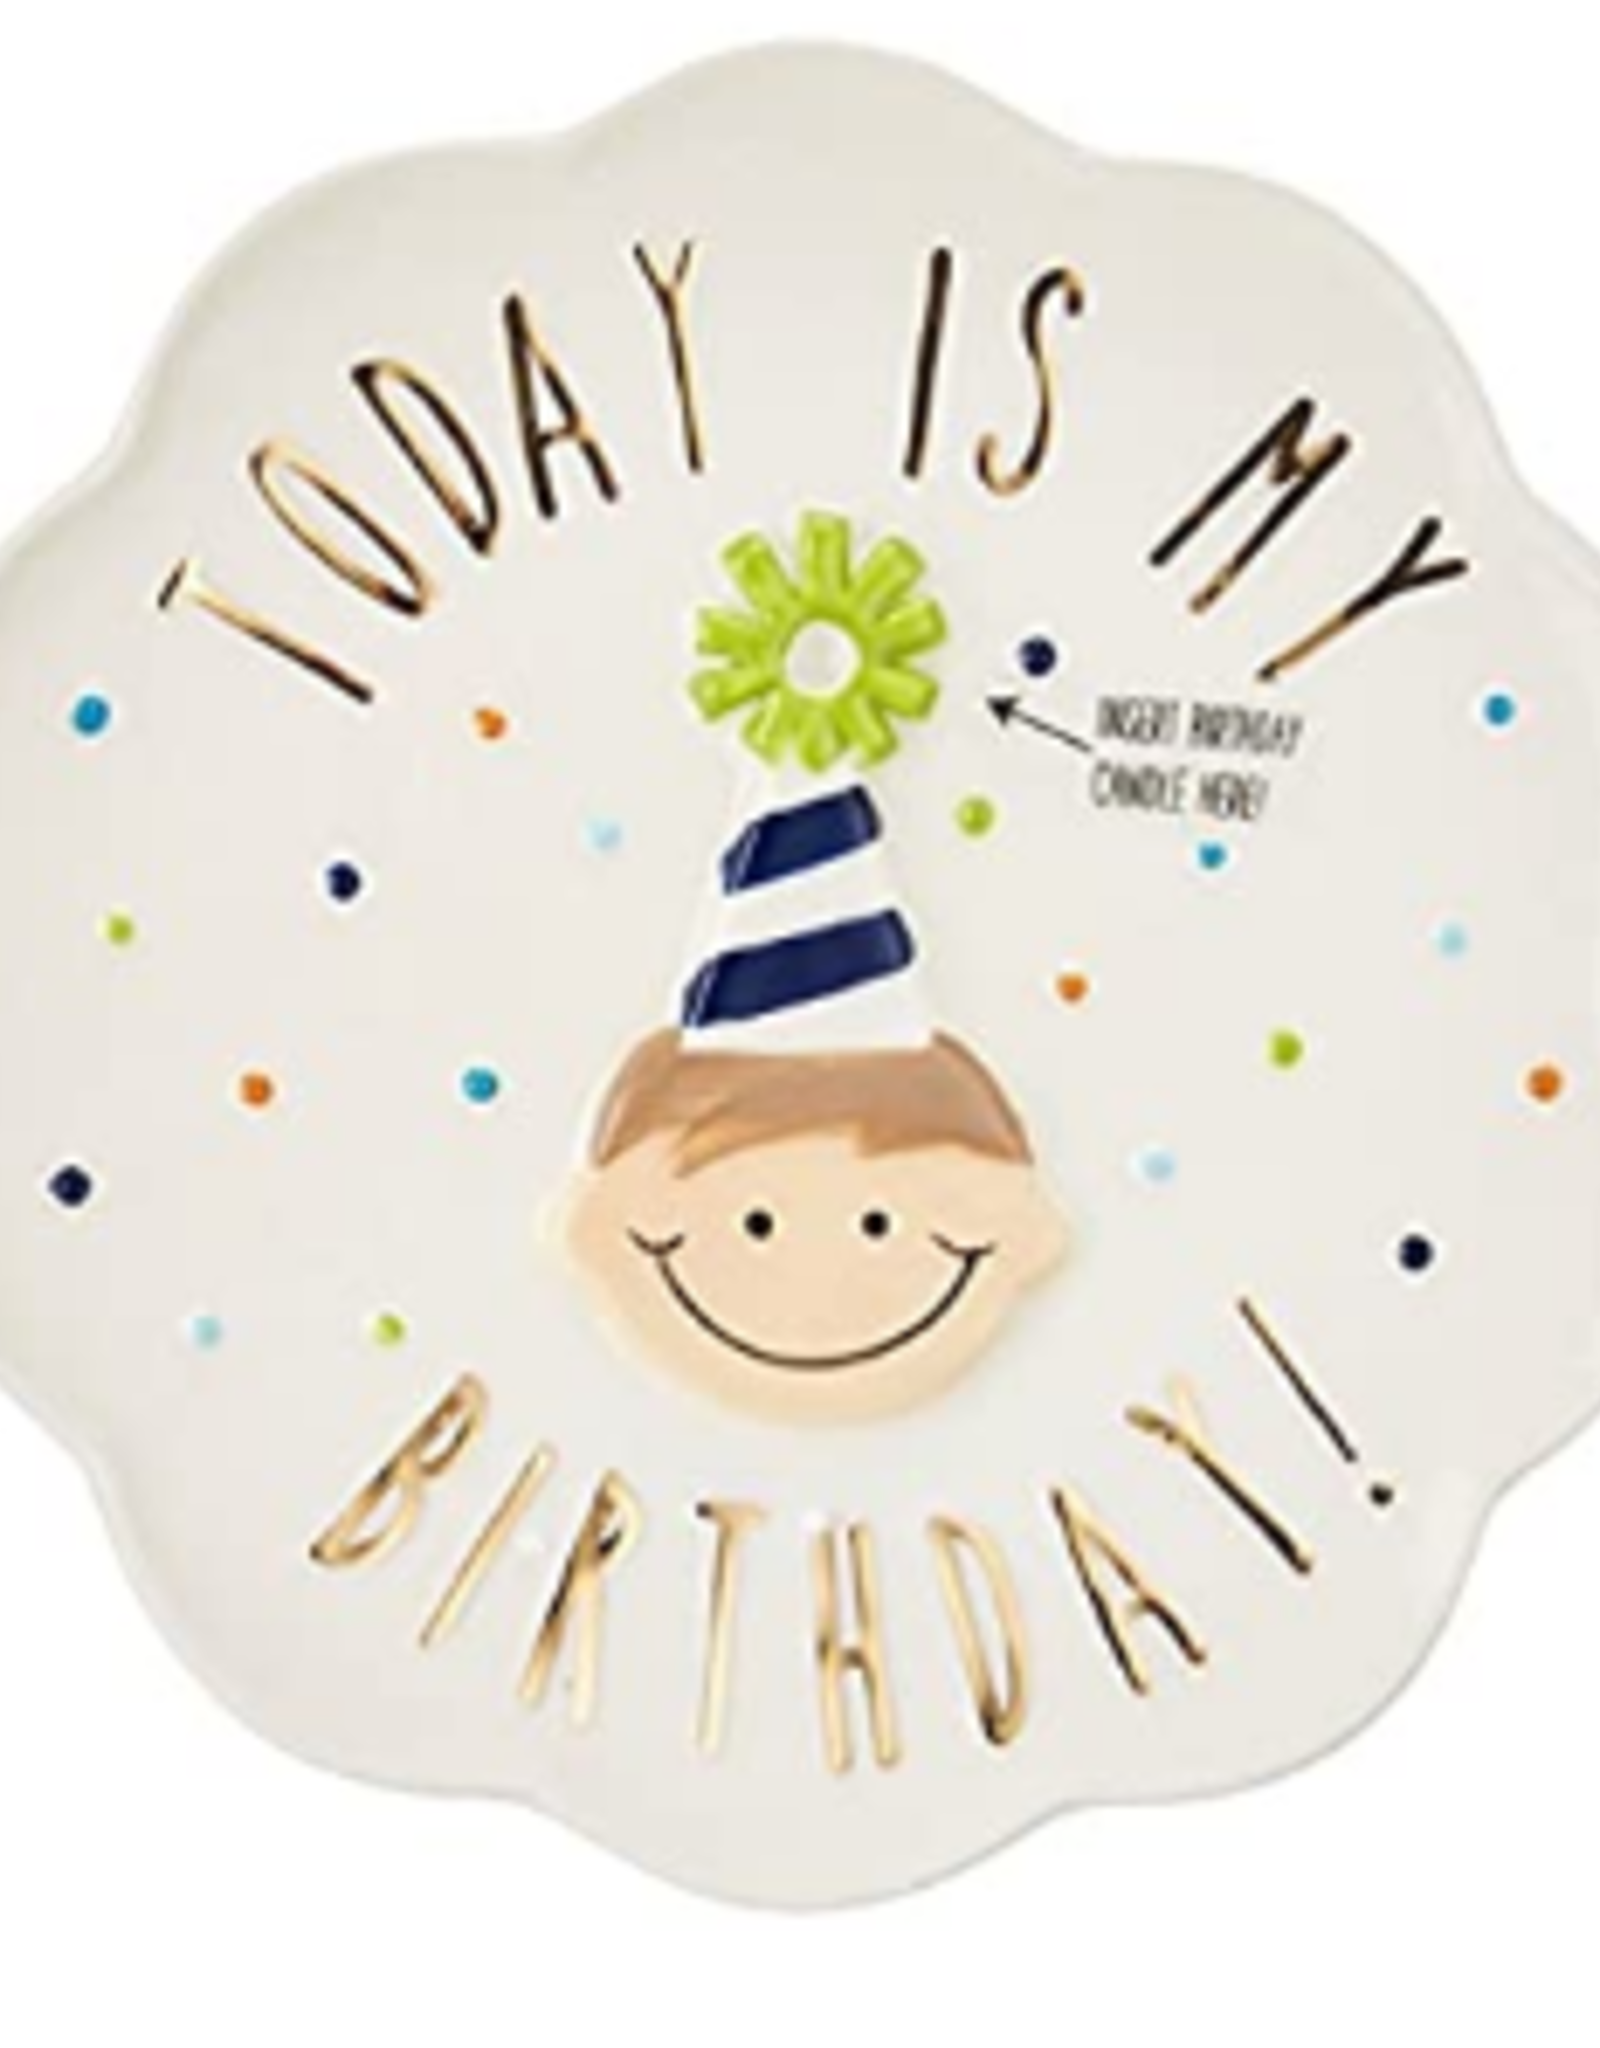 Birthday Boy Plate